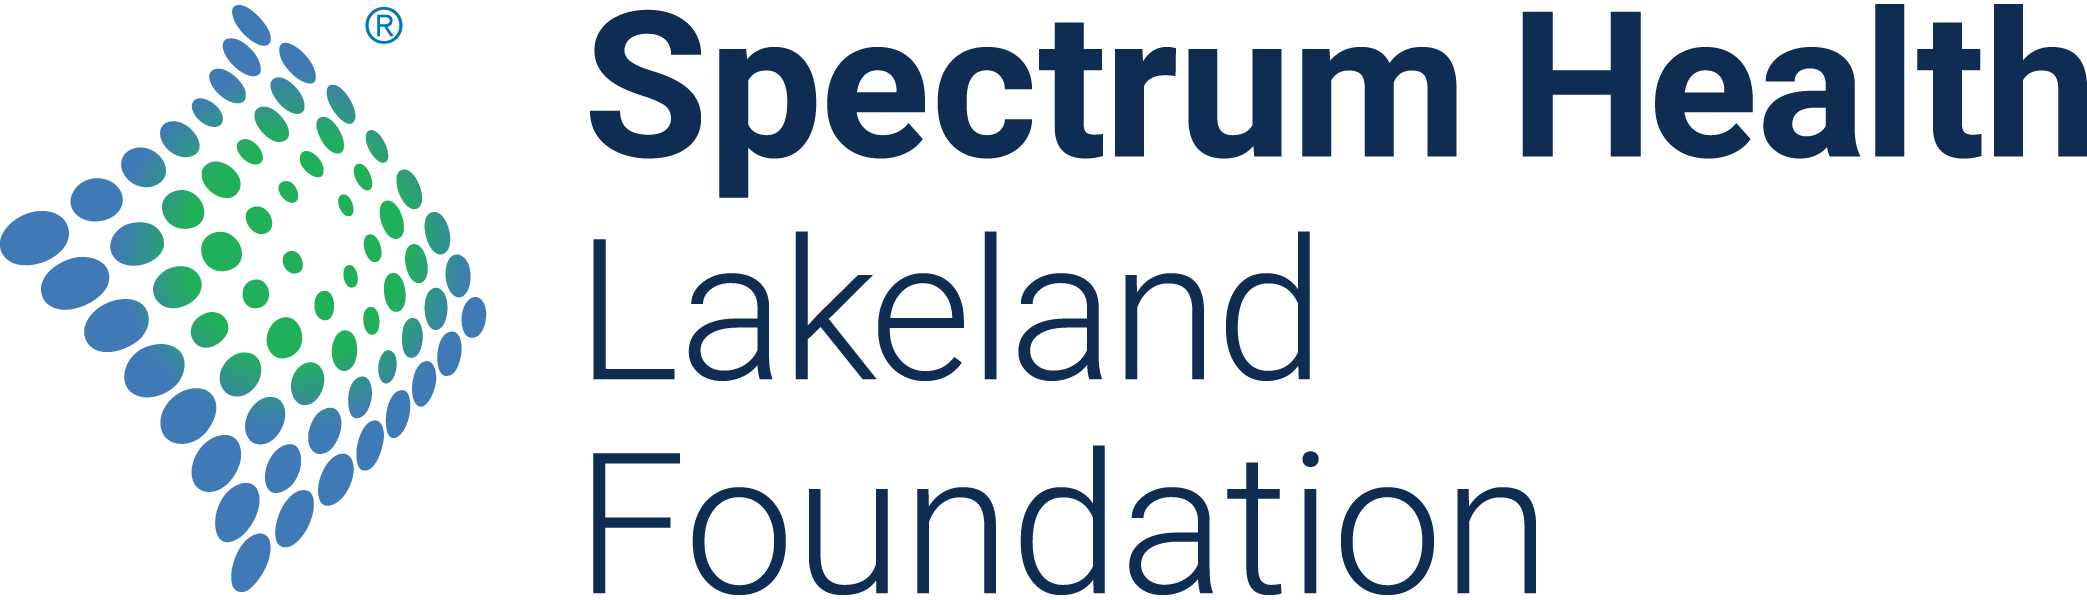 Spectrum Health Lakeland Foundation